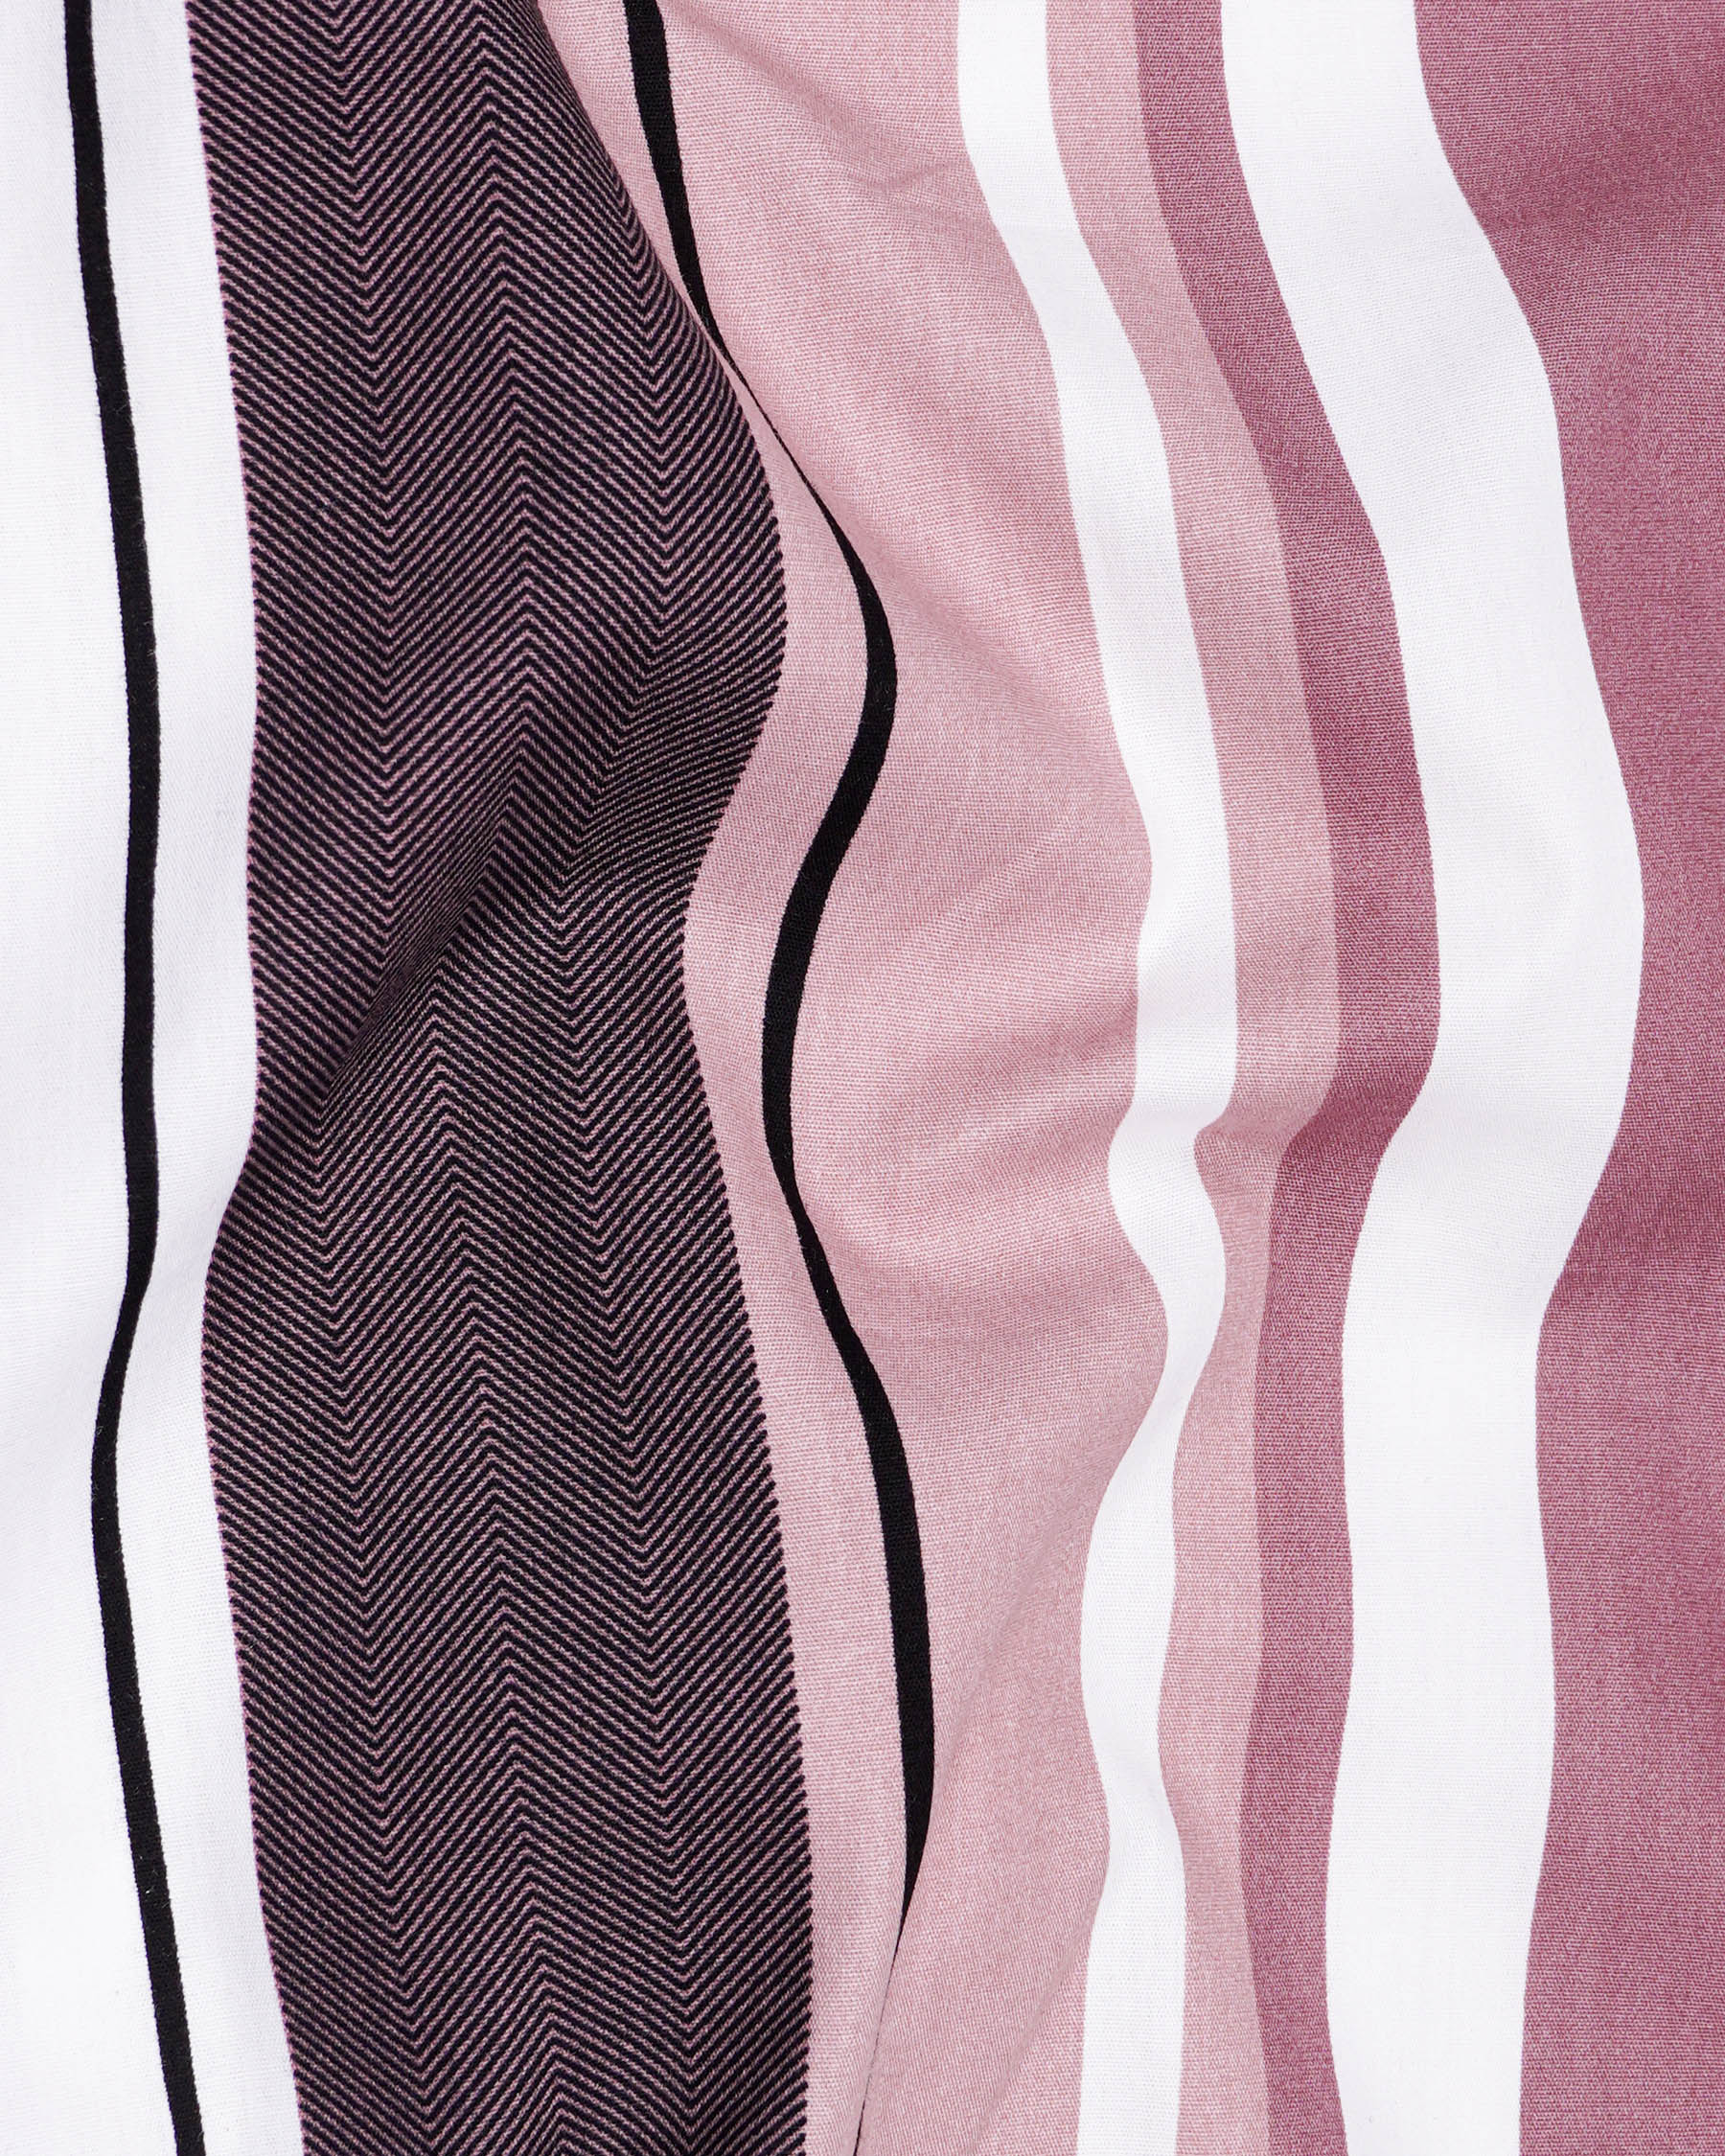 Bouquet with Melaine Pink Striped Premium Cotton Shirt 7420-38,7420-38,7420-39,7420-39,7420-40,7420-40,7420-42,7420-42,7420-44,7420-44,7420-46,7420-46,7420-48,7420-48,7420-50,7420-50,7420-52,7420-52